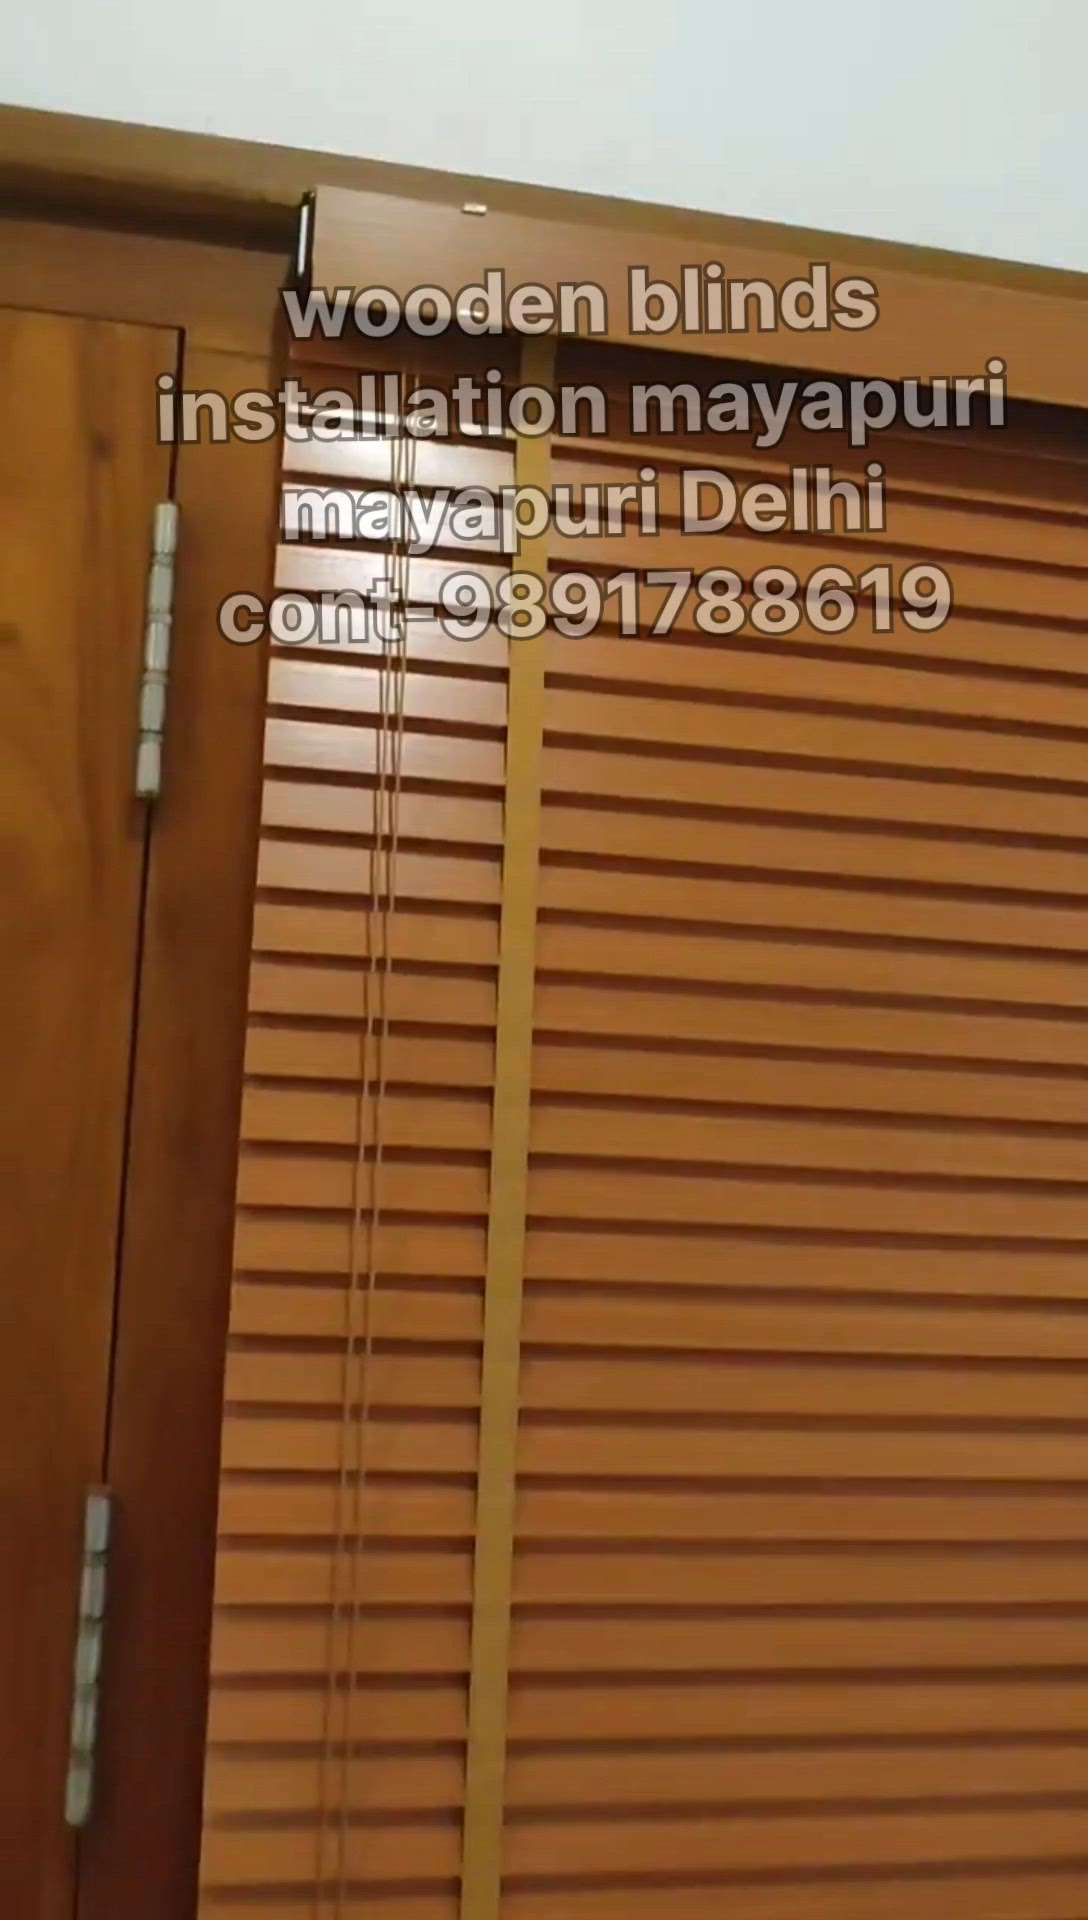 cordless faux wood blinds installation// alltipe windows blinds making mayapuri Delhi 9891788619